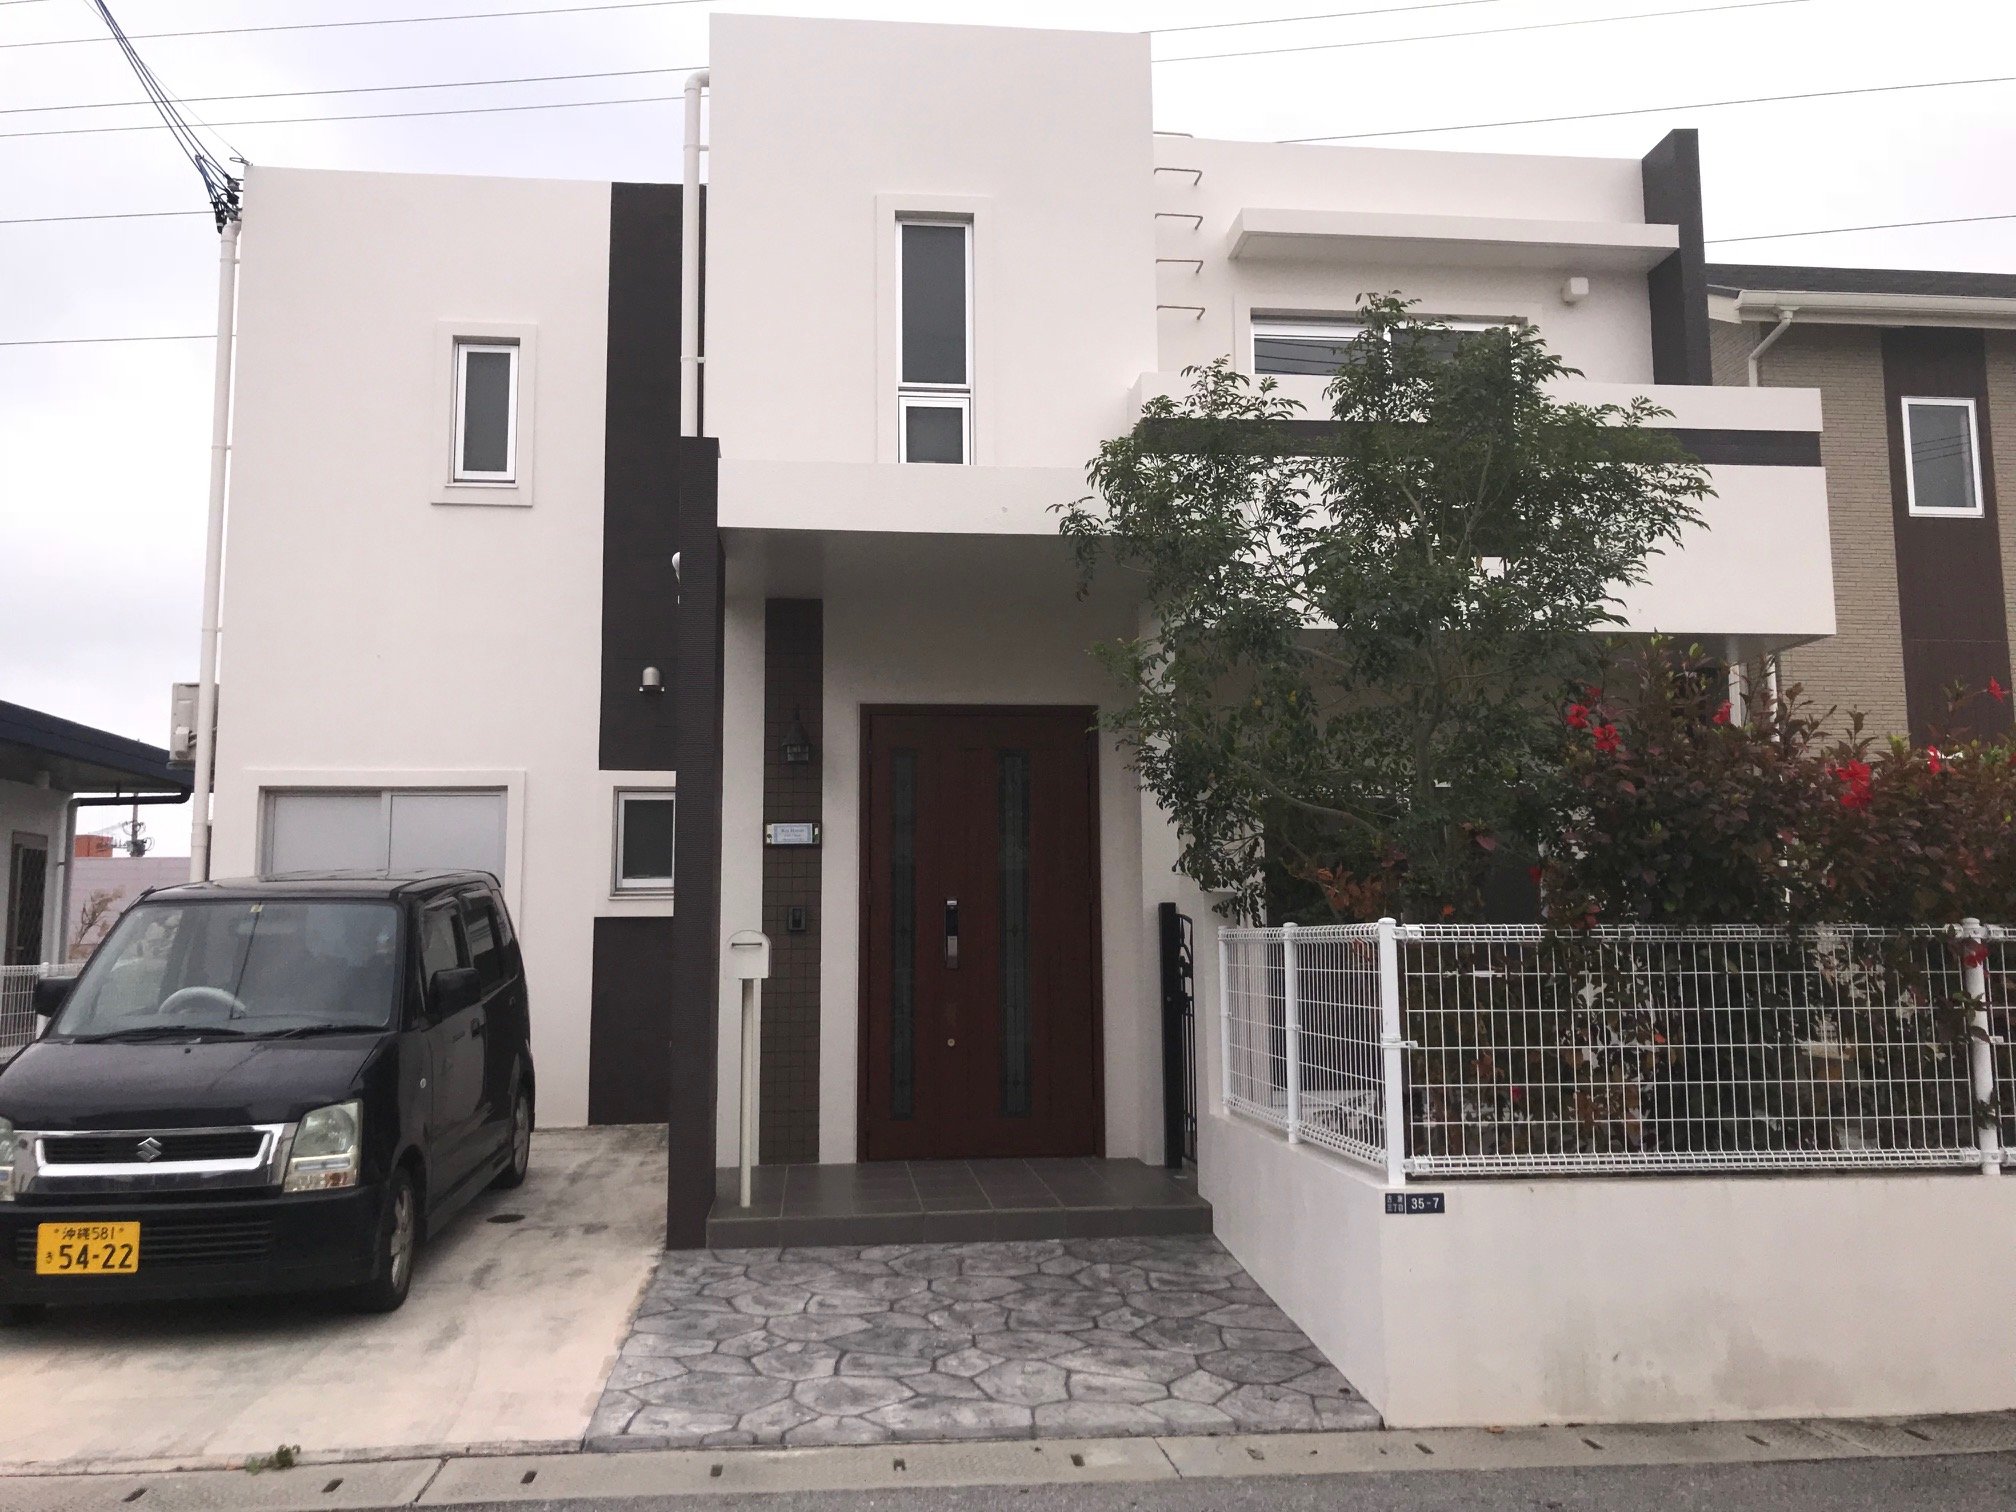 KIN HOUSE - My Housing Okinawa